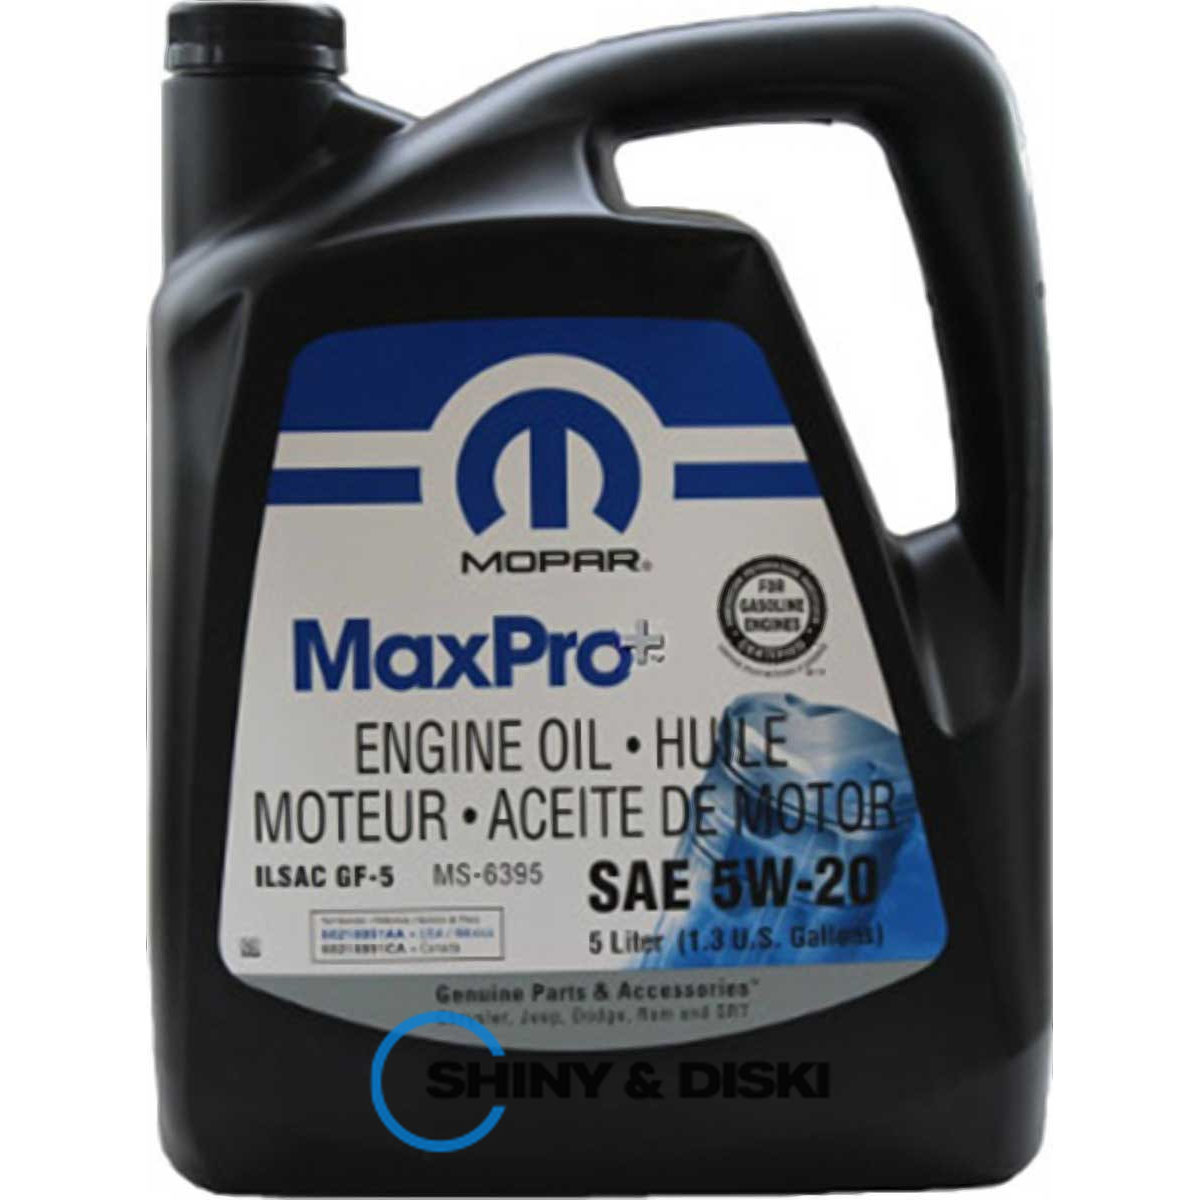 mopar maxpro+ sae 0w-20 engine oil (5л)